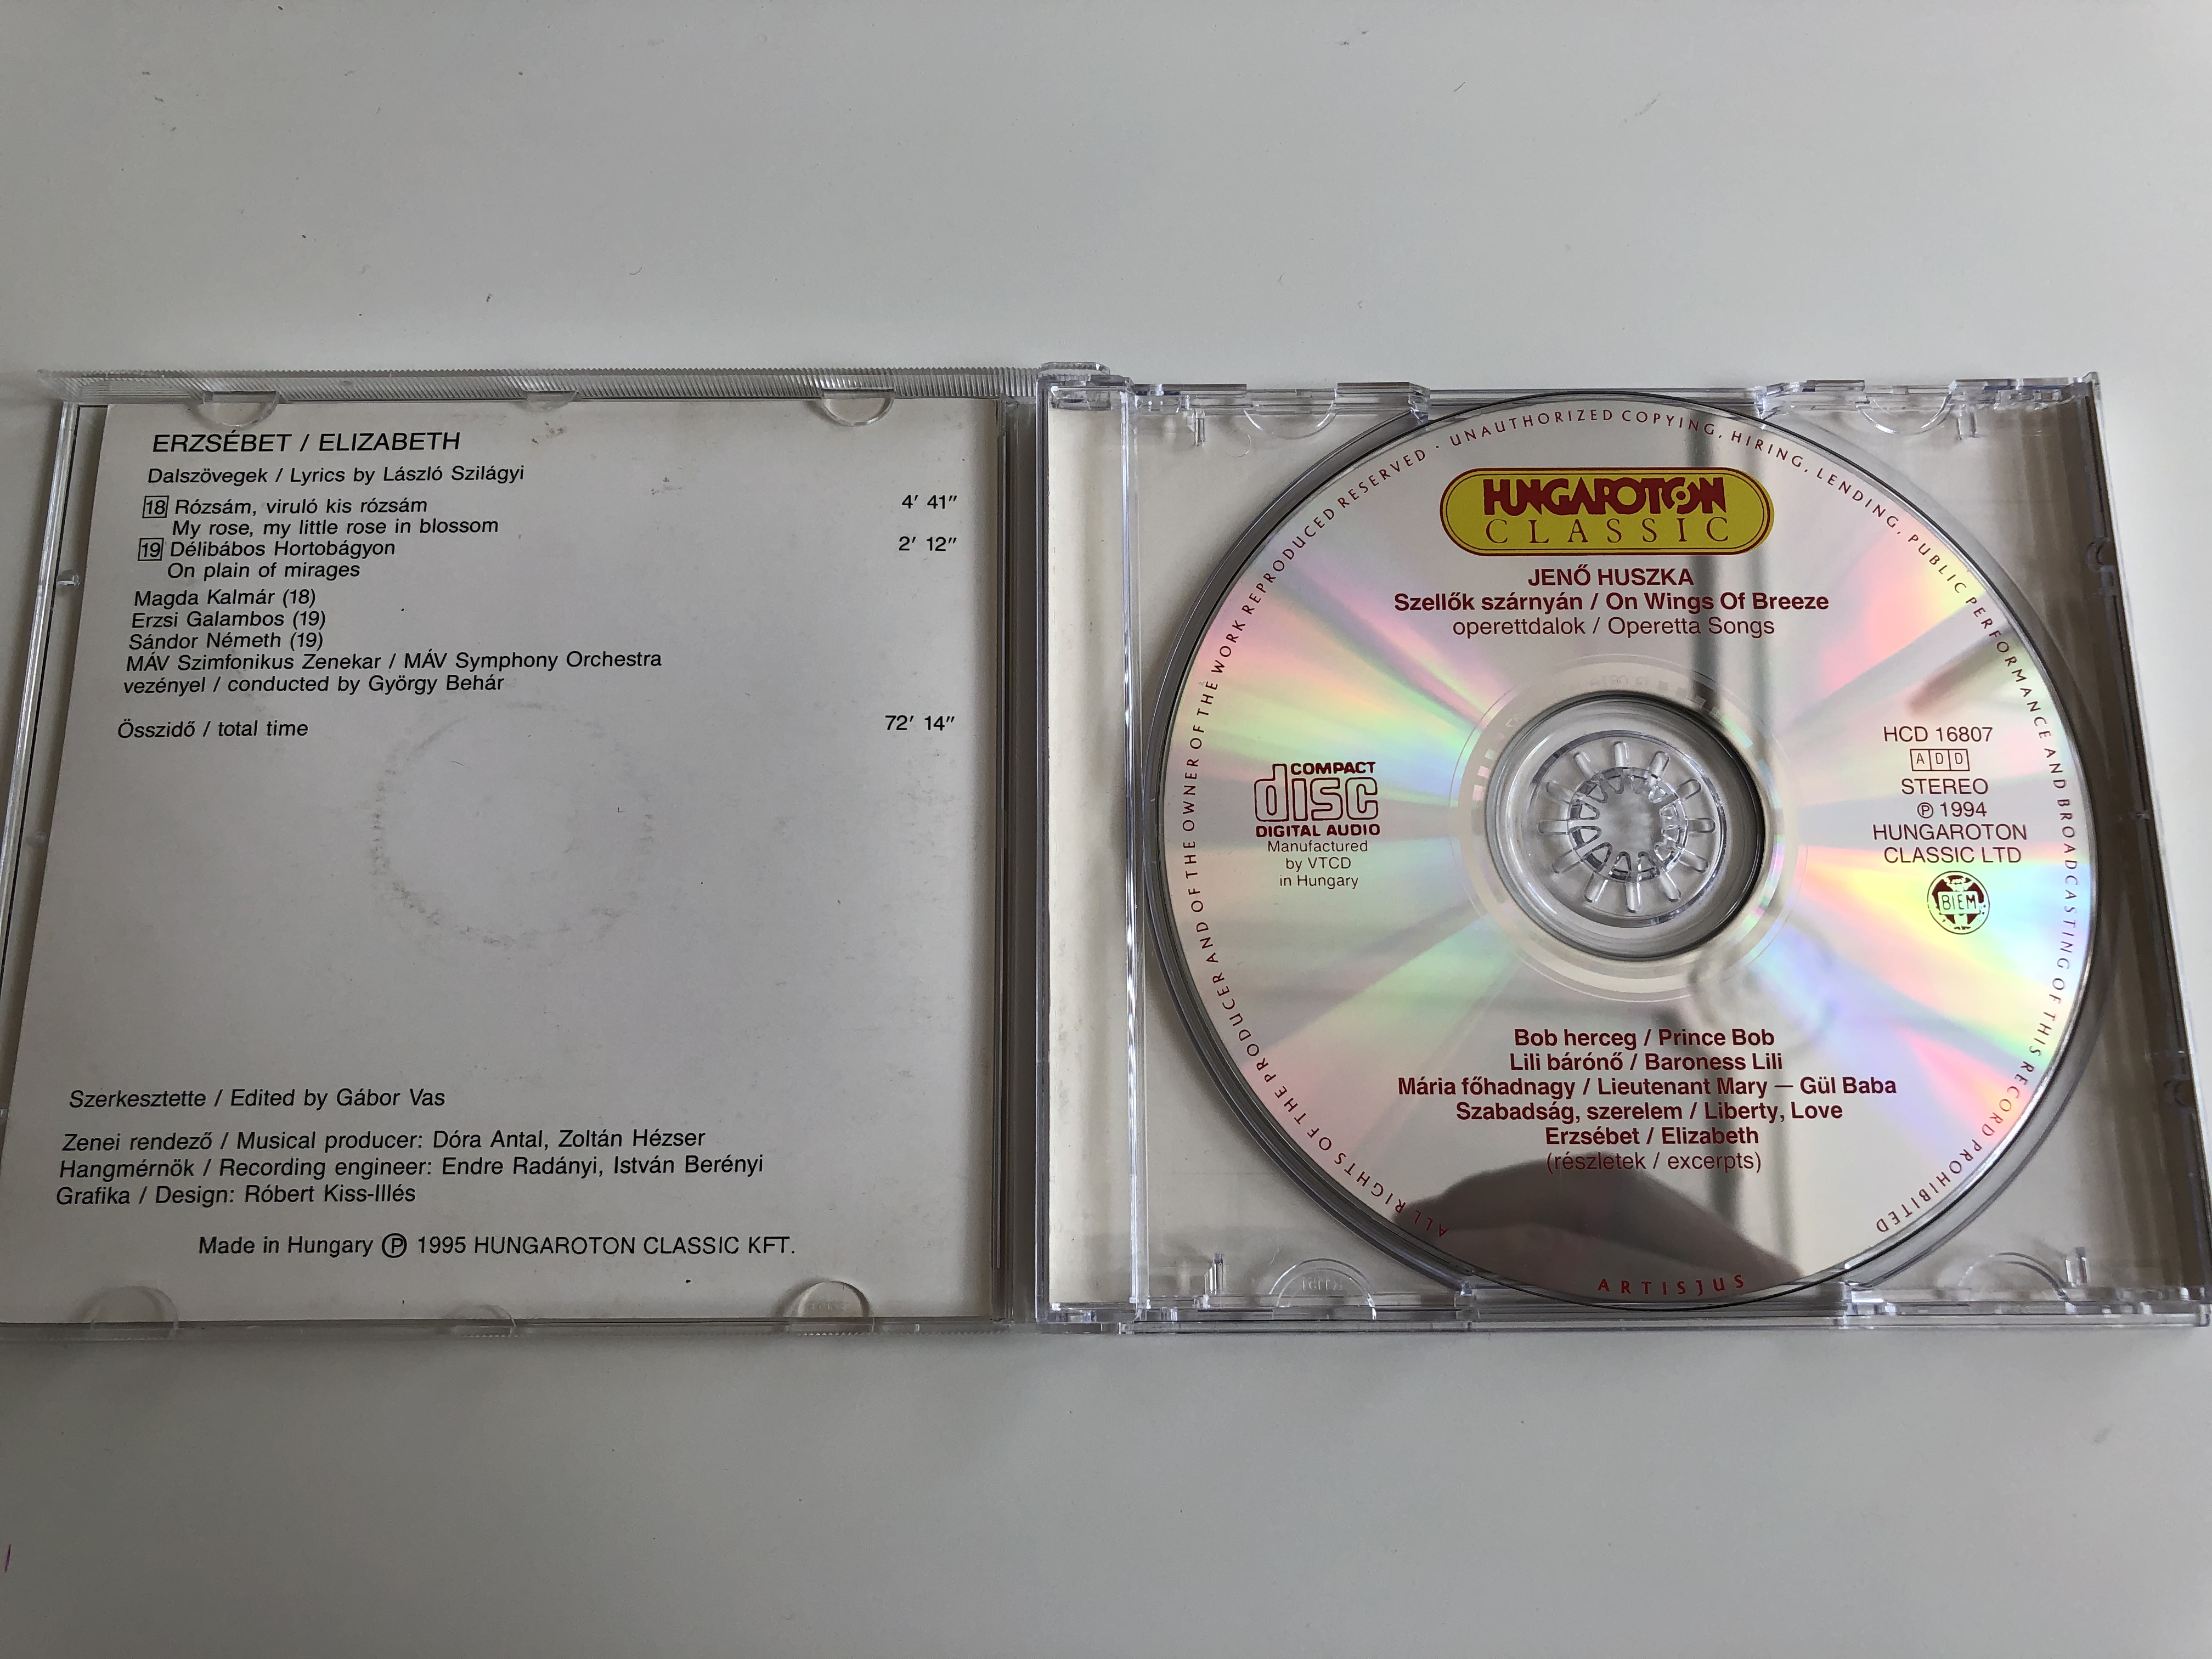 on-wings-of-breeze-jen-huszka-operetta-songs-hungaroton-classic-audio-cd-1995-szell-sz-rny-n-huszka-jen-operettdalai-hcd-16807-4-.jpg